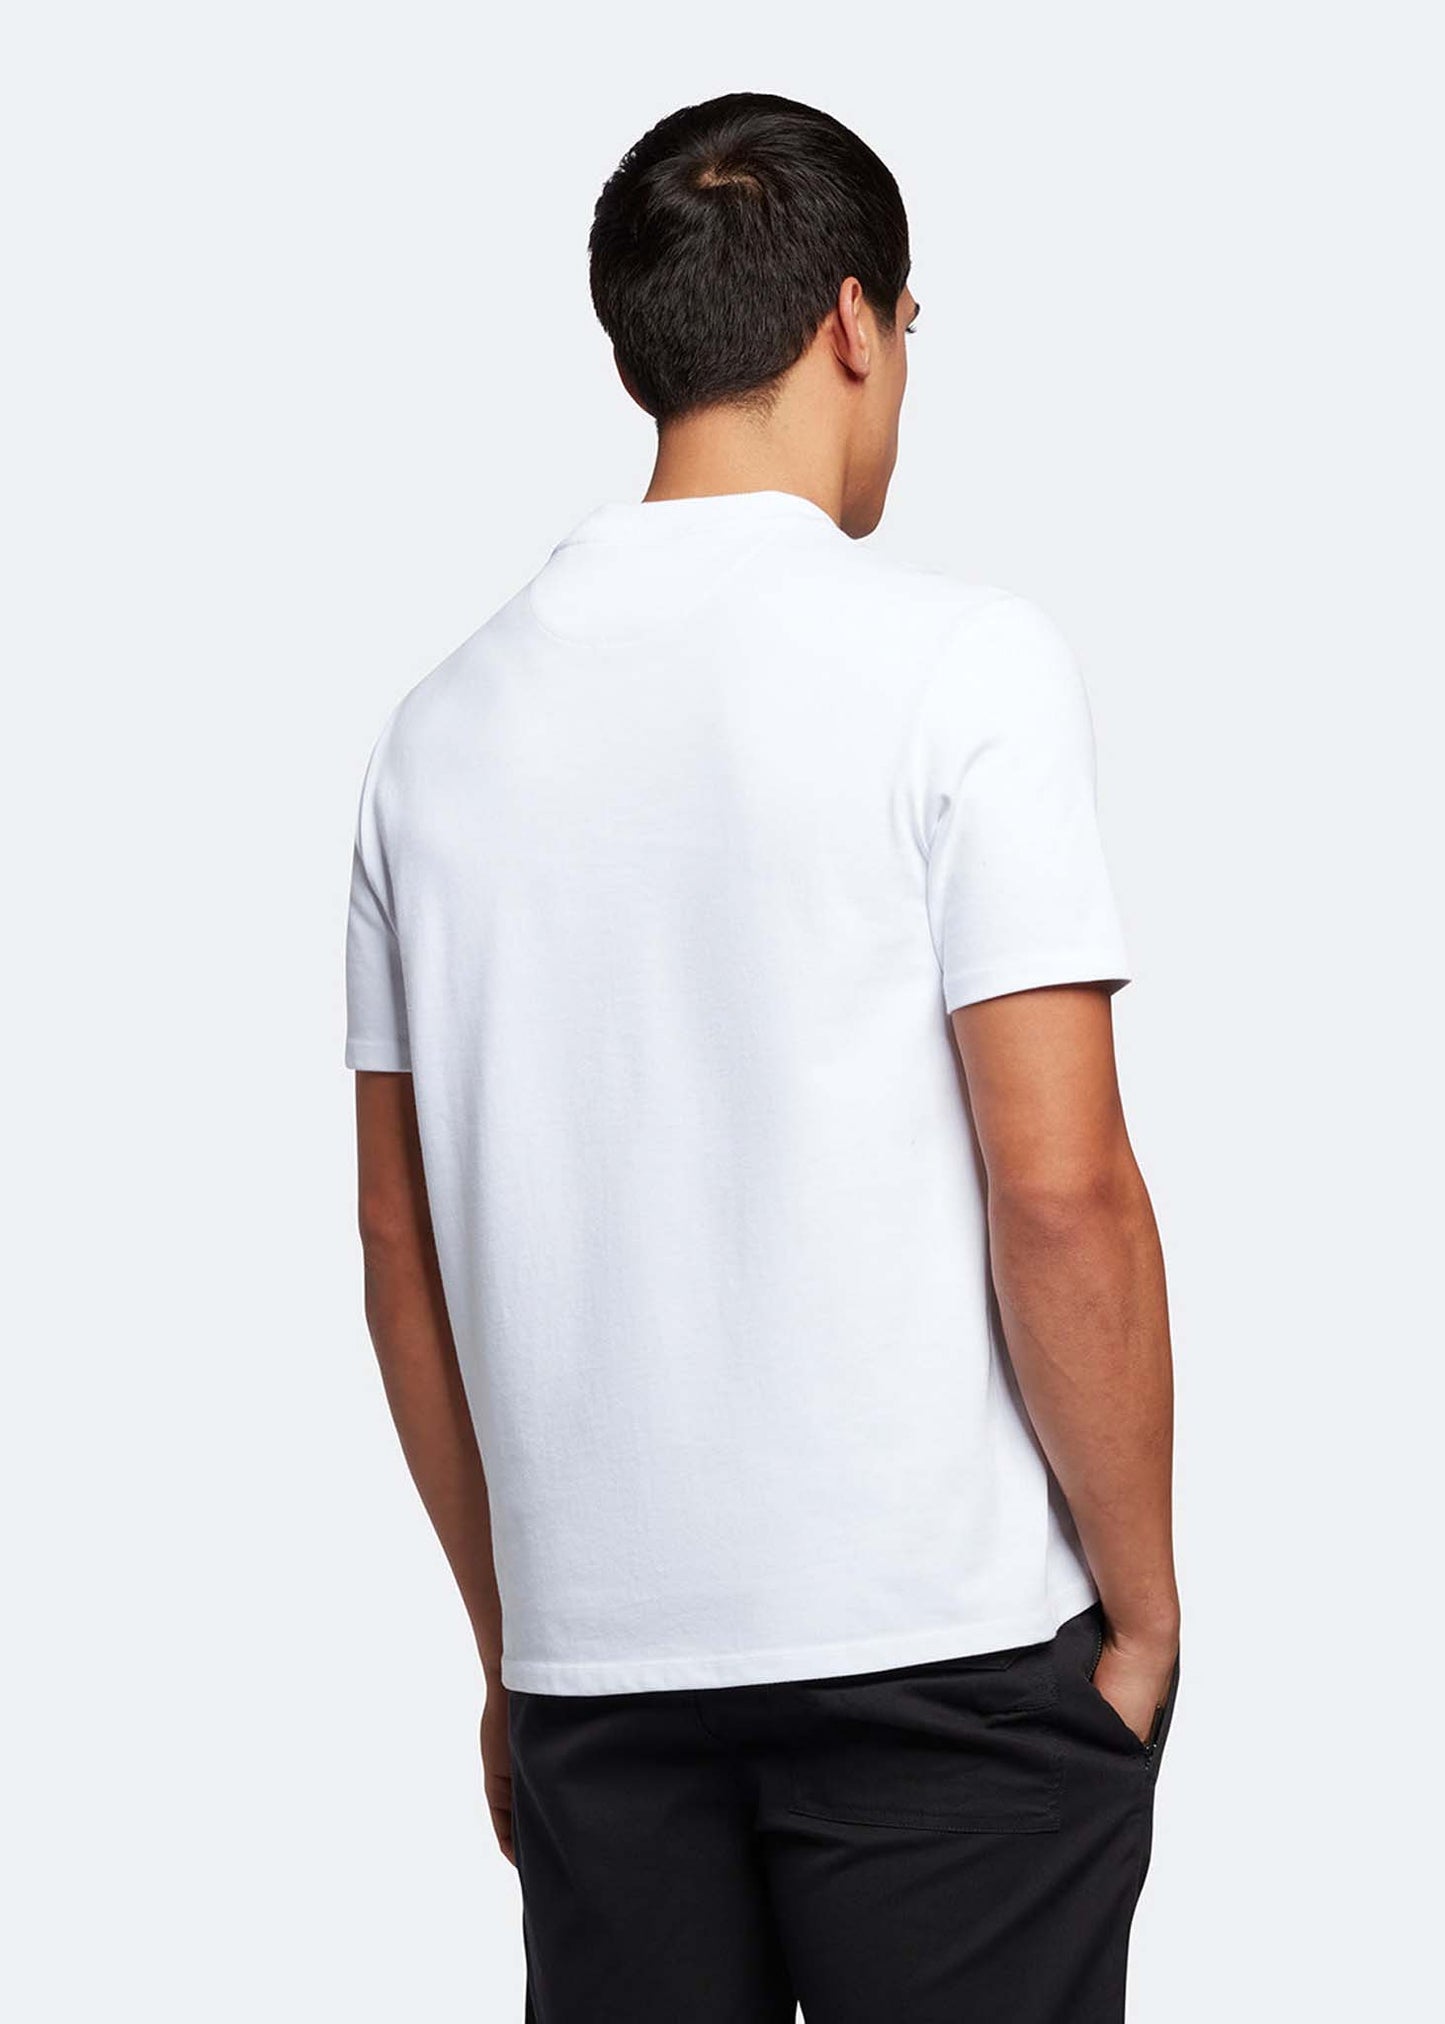 Pocket t-shirt - white